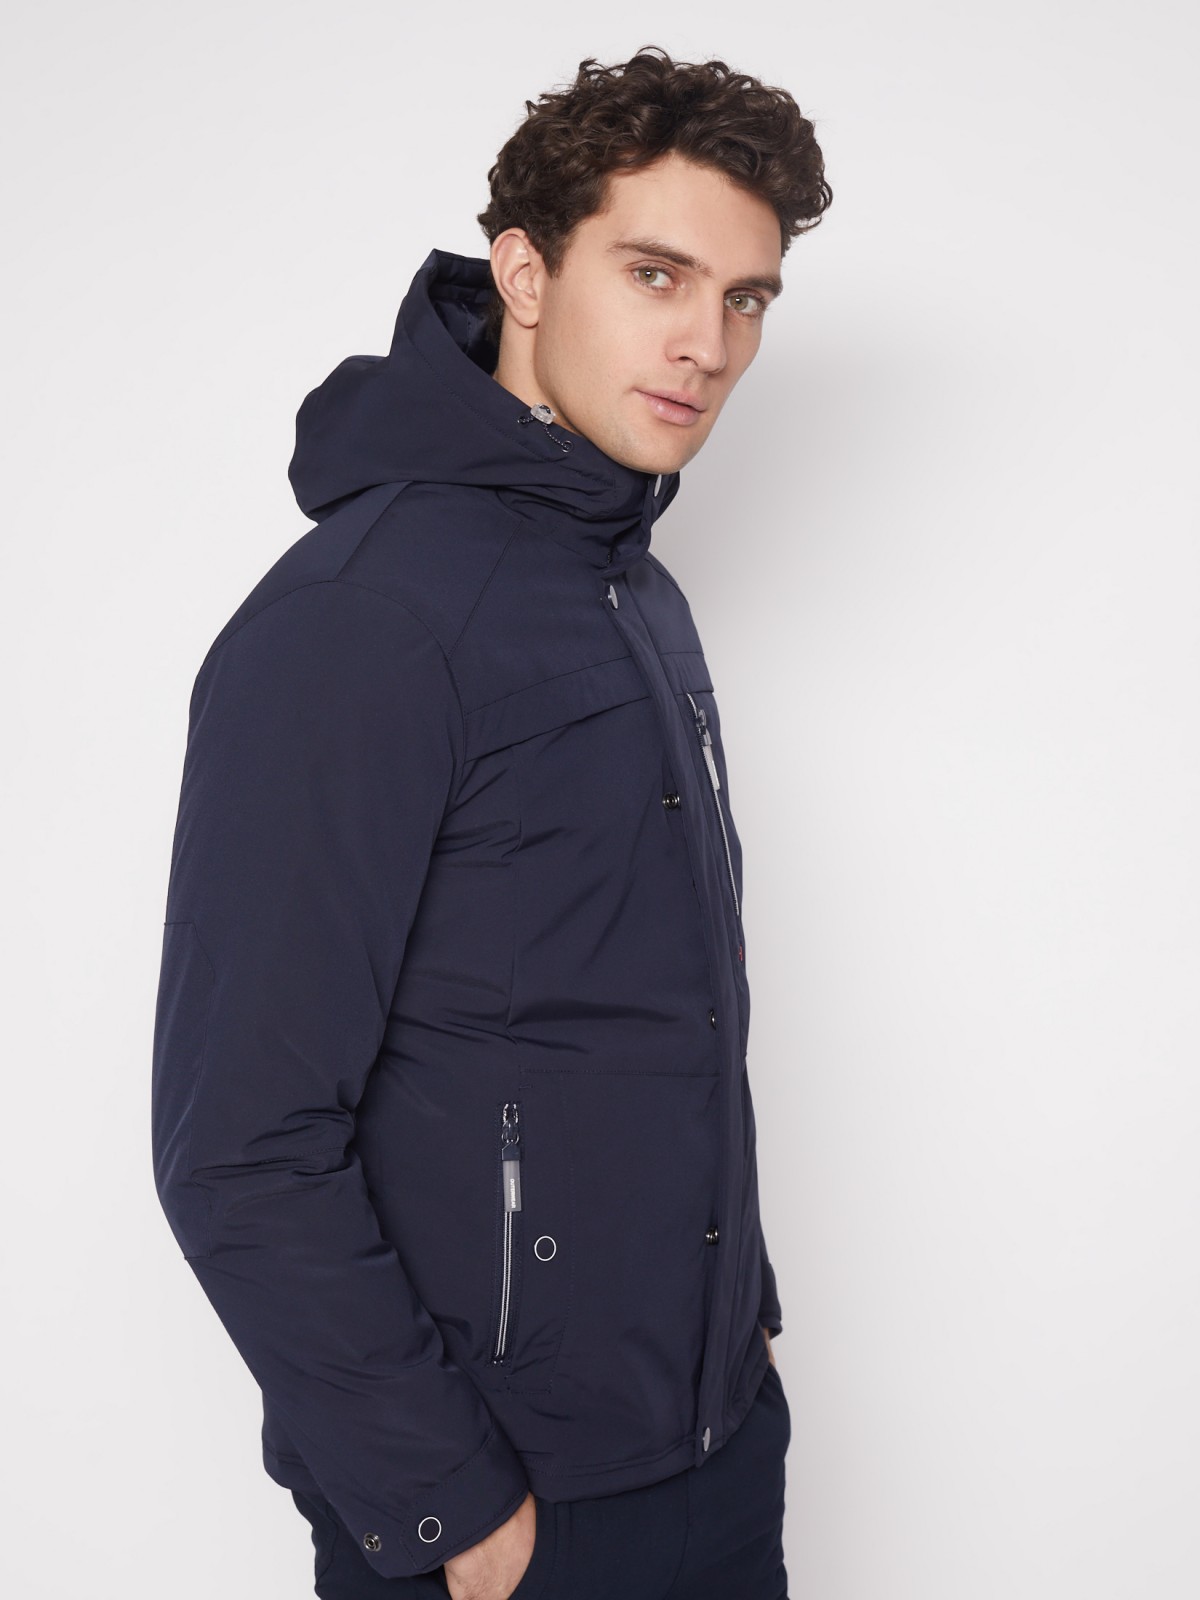 Утеплённая куртка с капюшоном zolla 012135102104, цвет темно-синий, размер M - фото 5